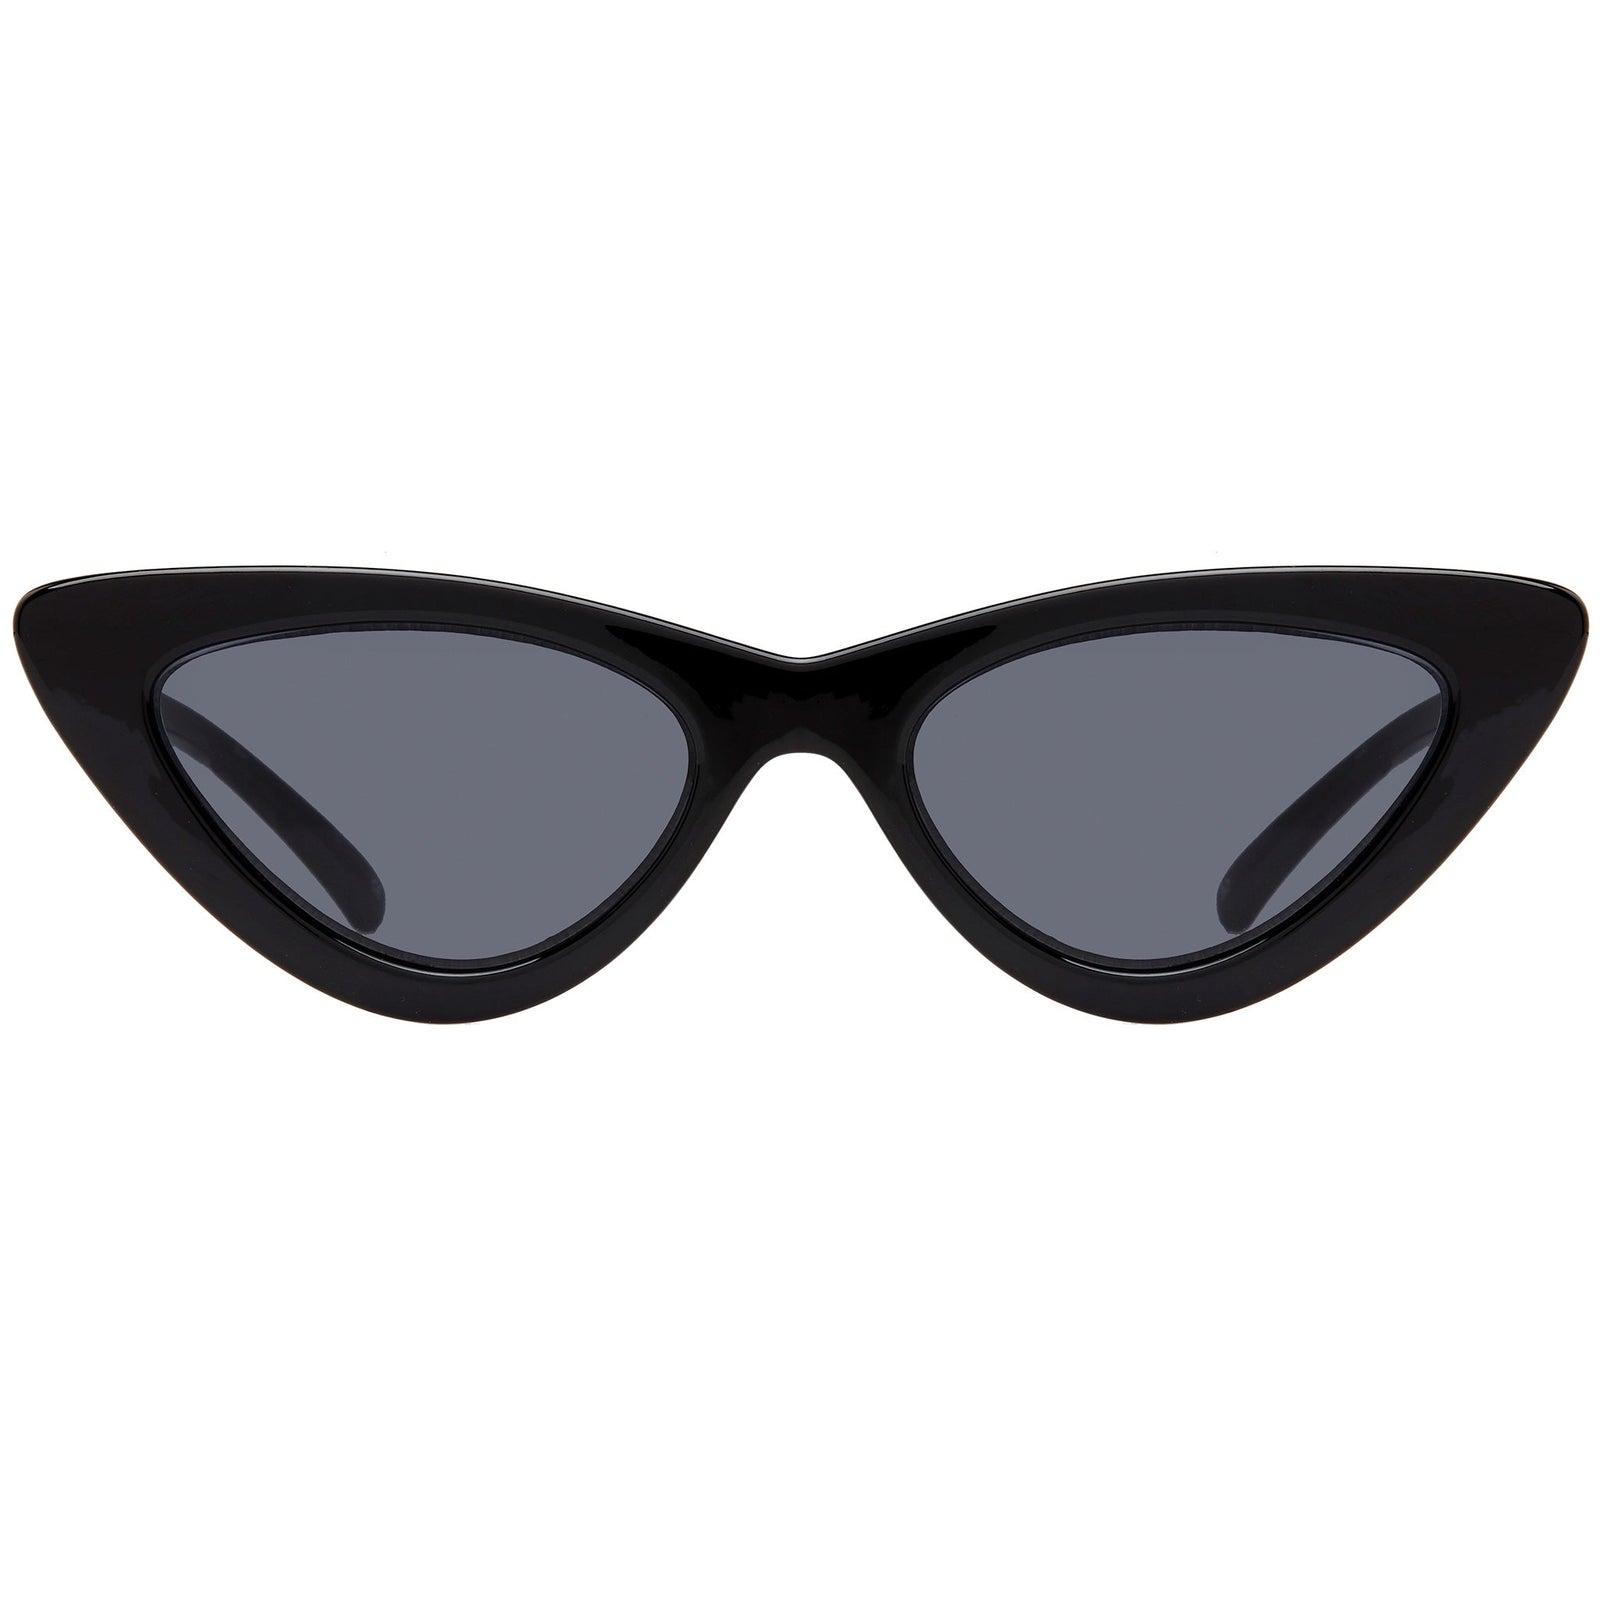 Adam Selman Le Specs The Last Lolita Sunglasses